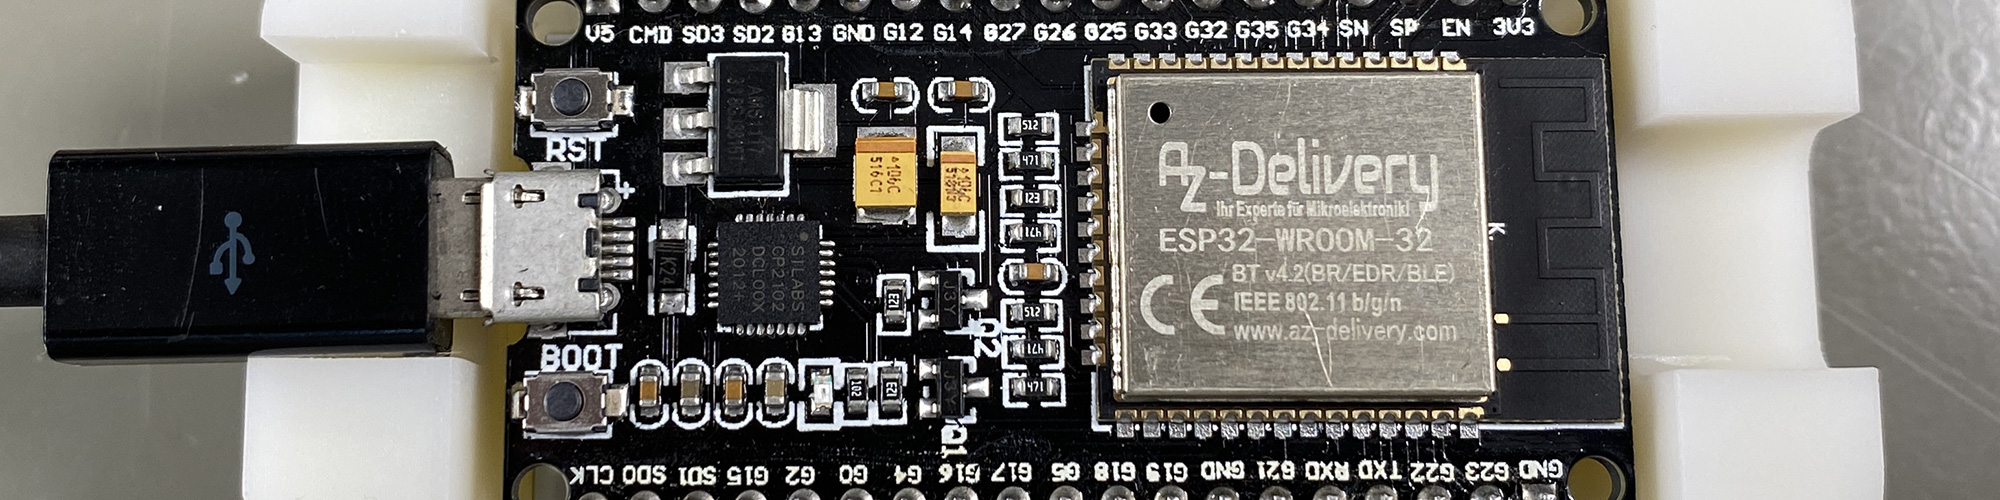 Three Elgato Key Light remote control using an ESP32 Wi-Fi module